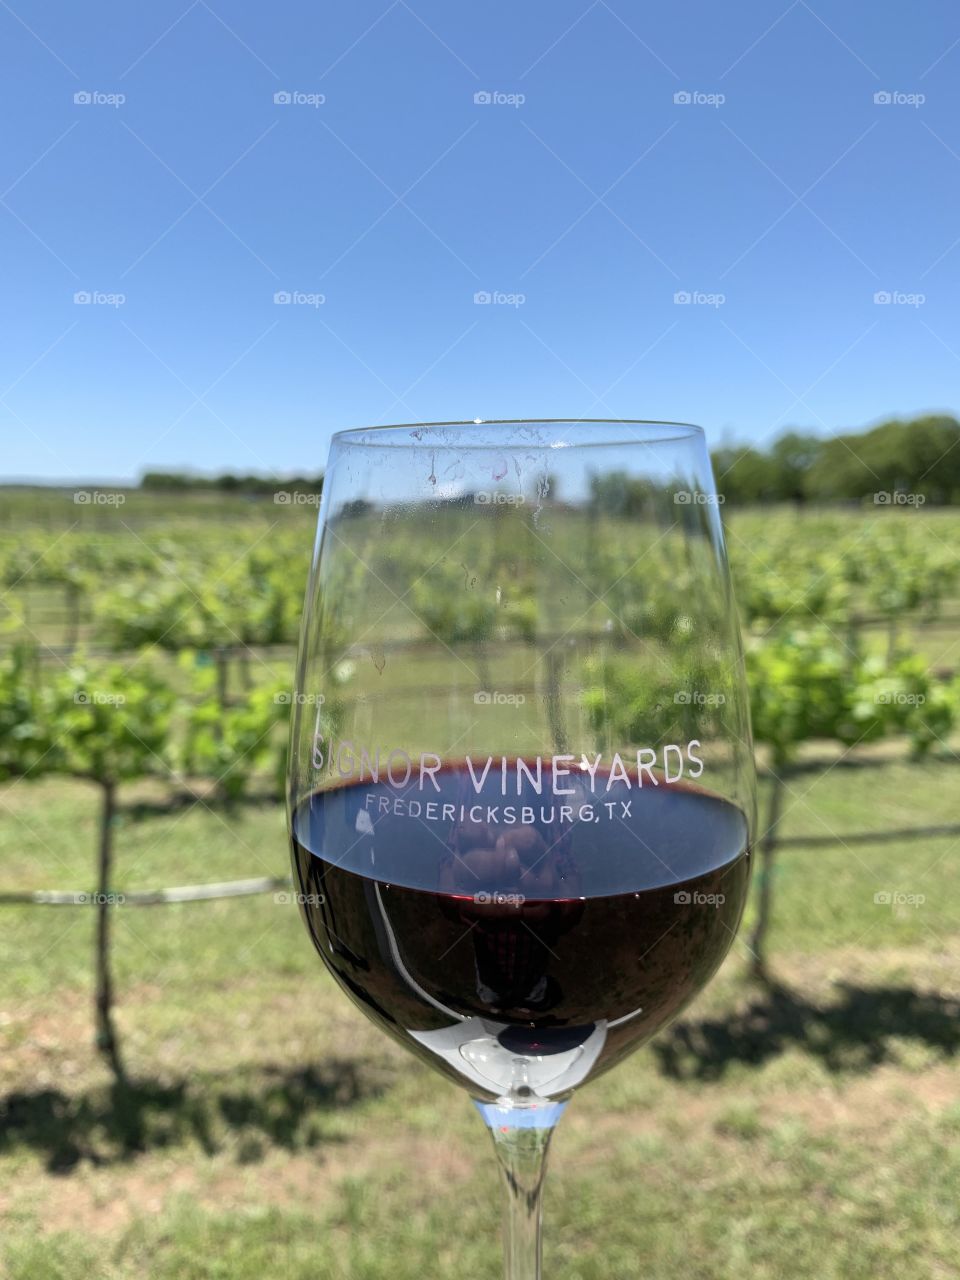 Winery